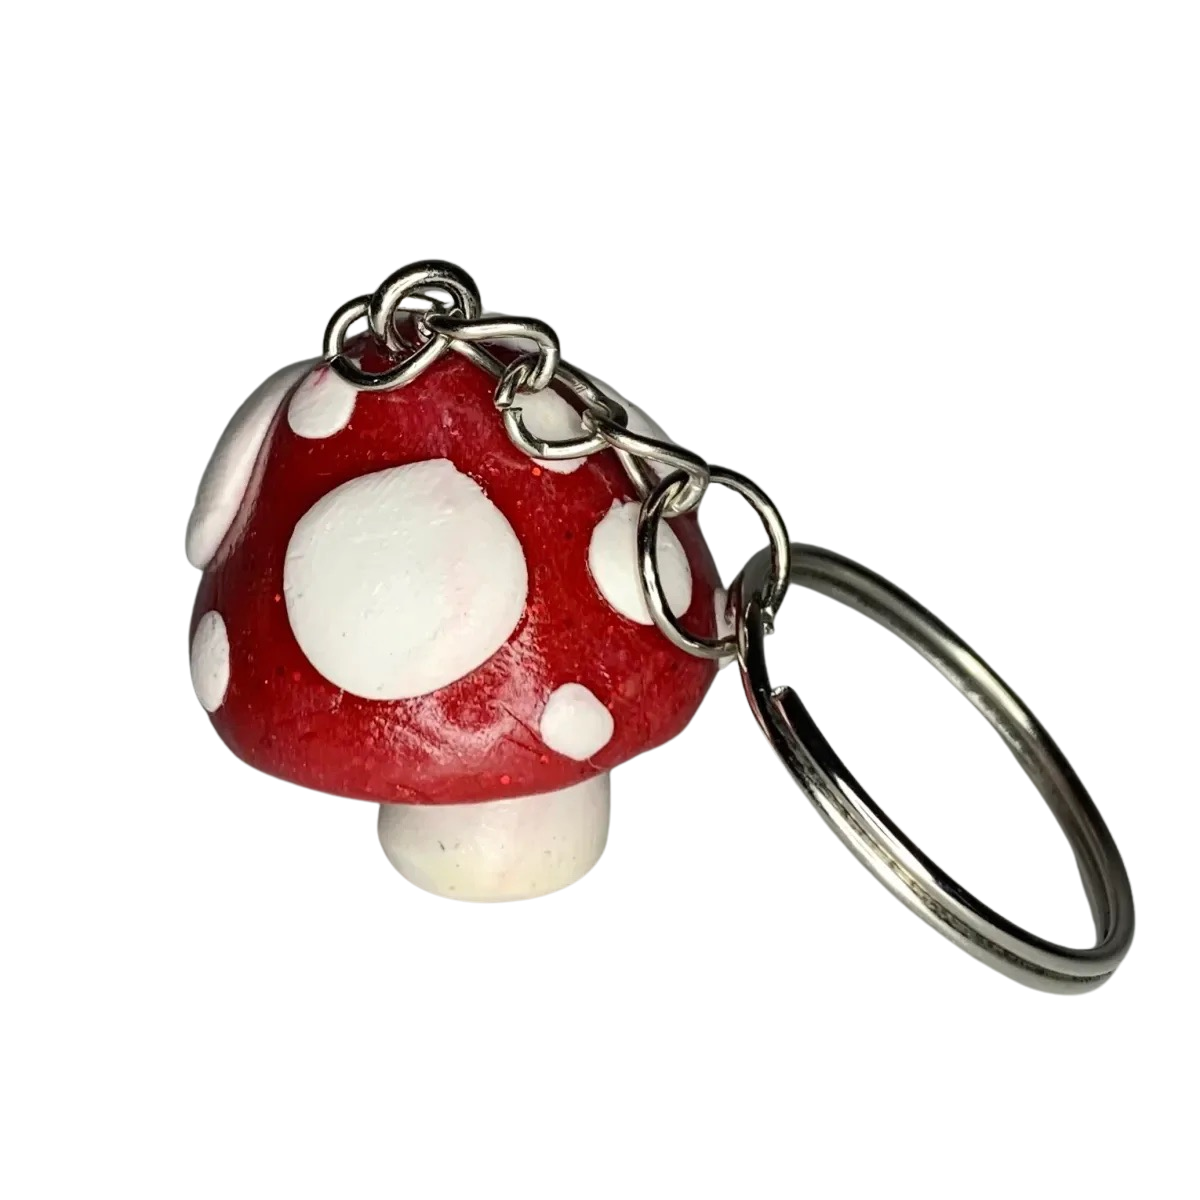 Sparkly Dark Red White Spotted Mushroom Keychains, cartoon, cute, stylized